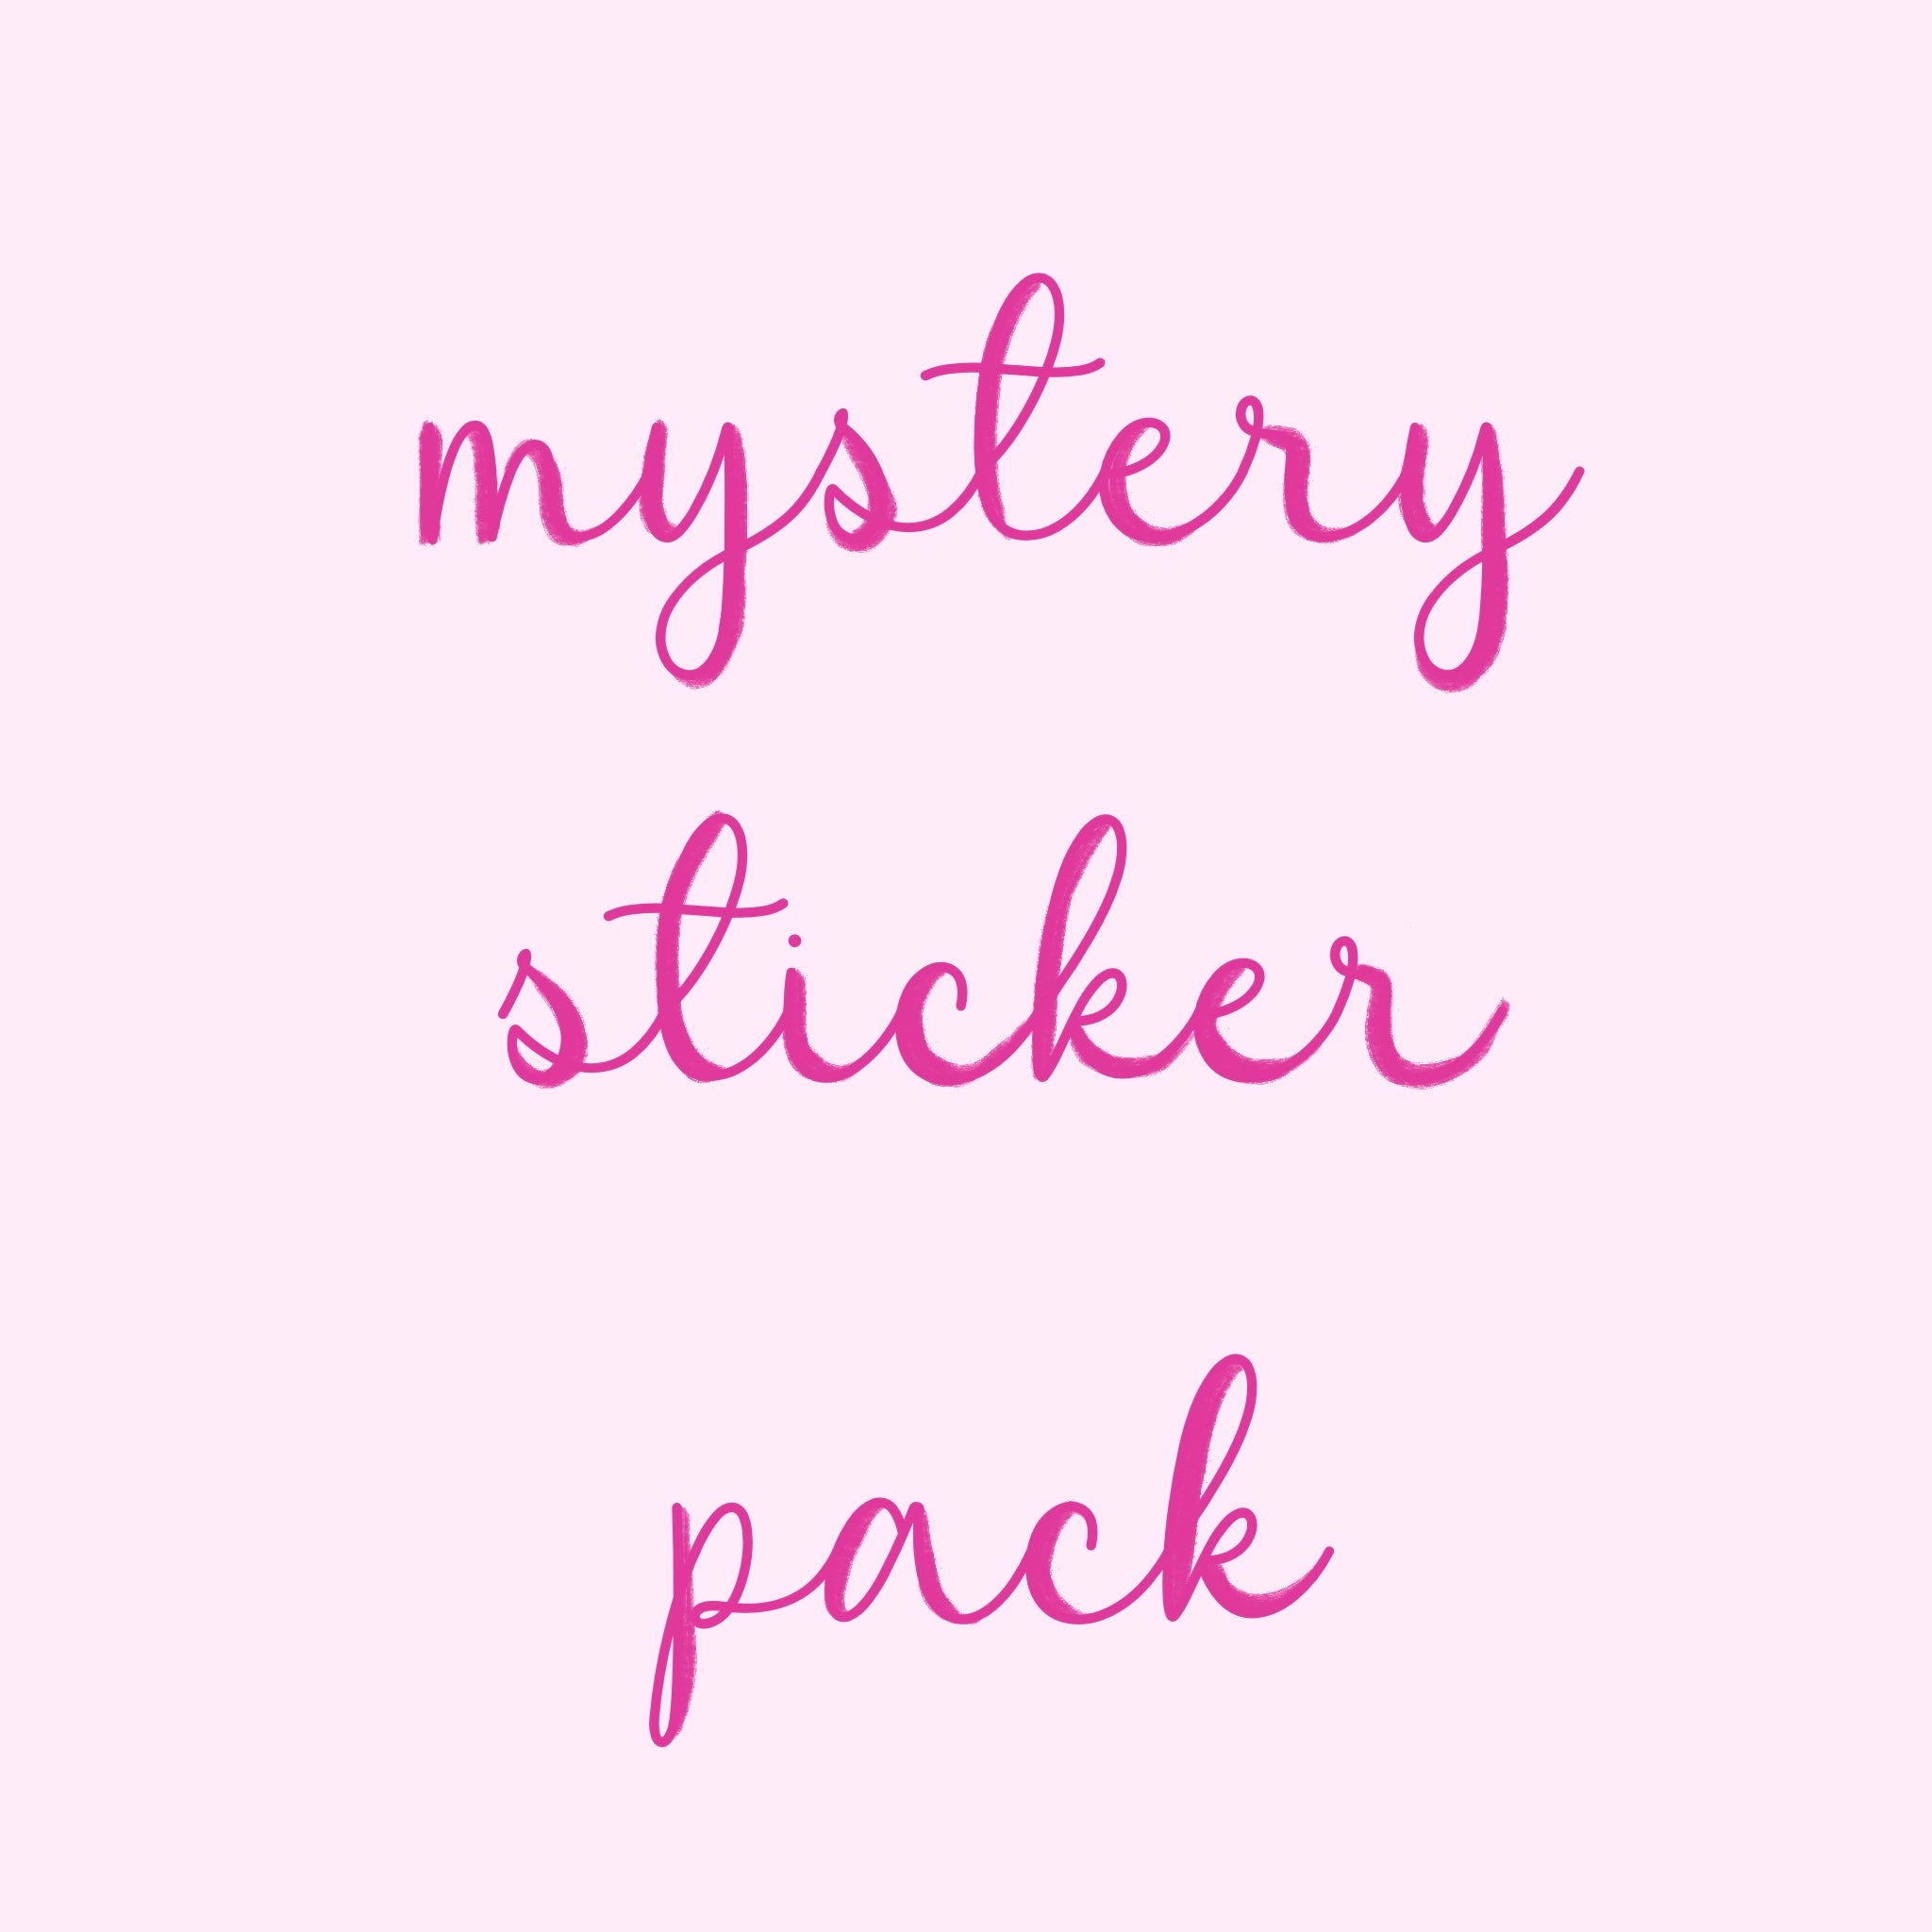 Mystery Sticker Box (12 stickers inside)